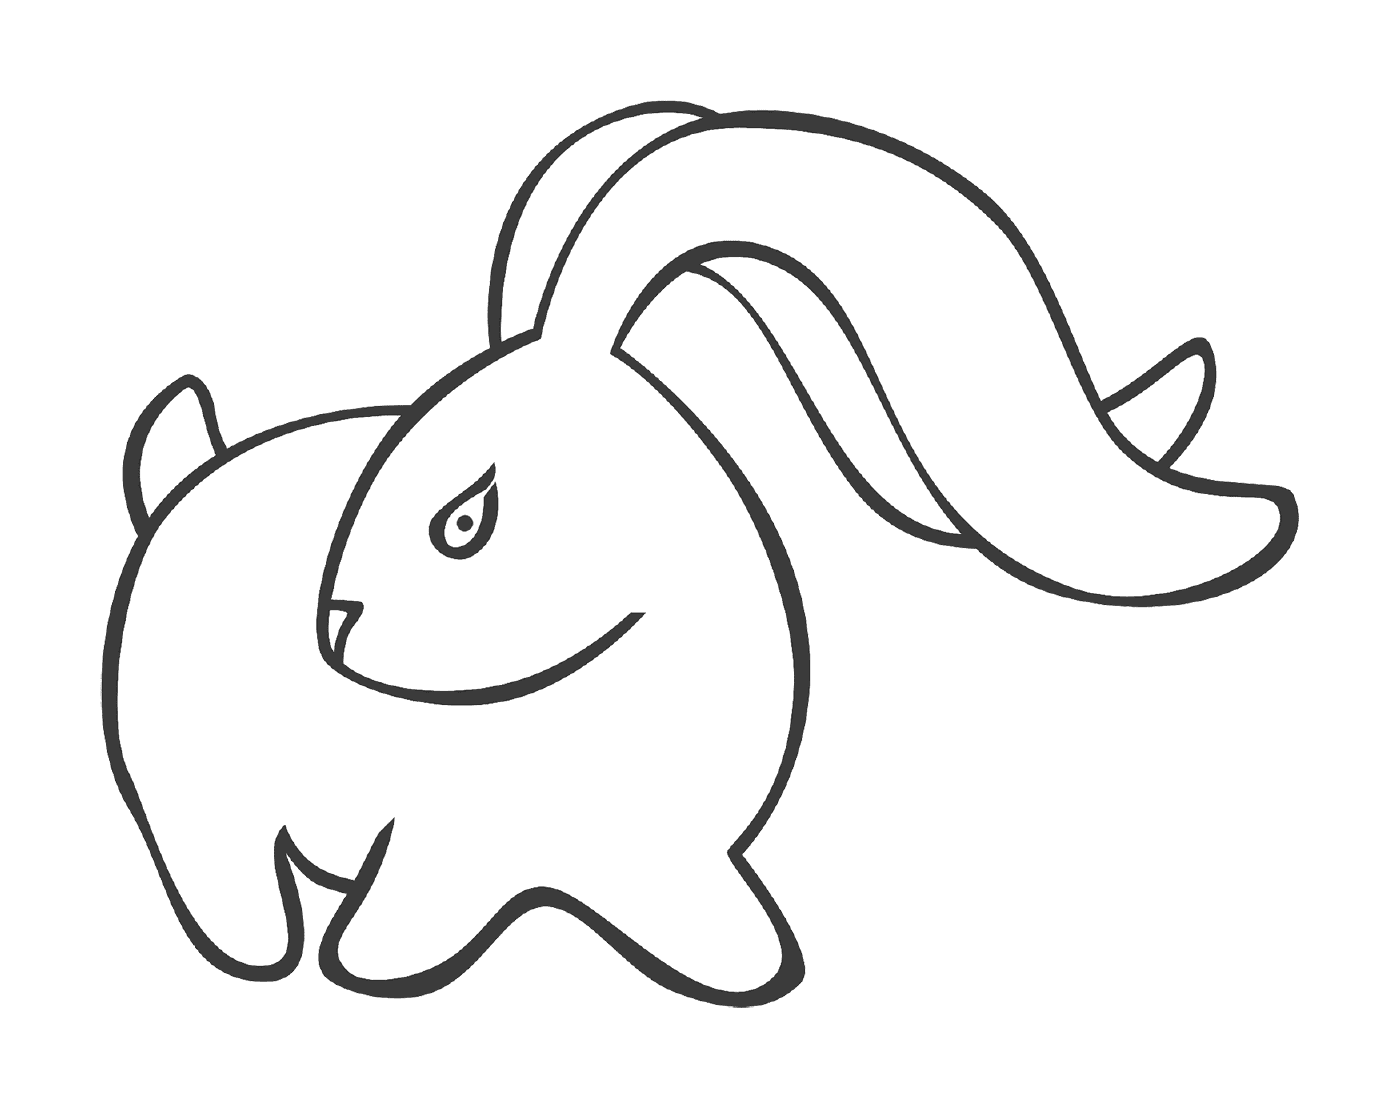  Rabbit with long stylized ears 